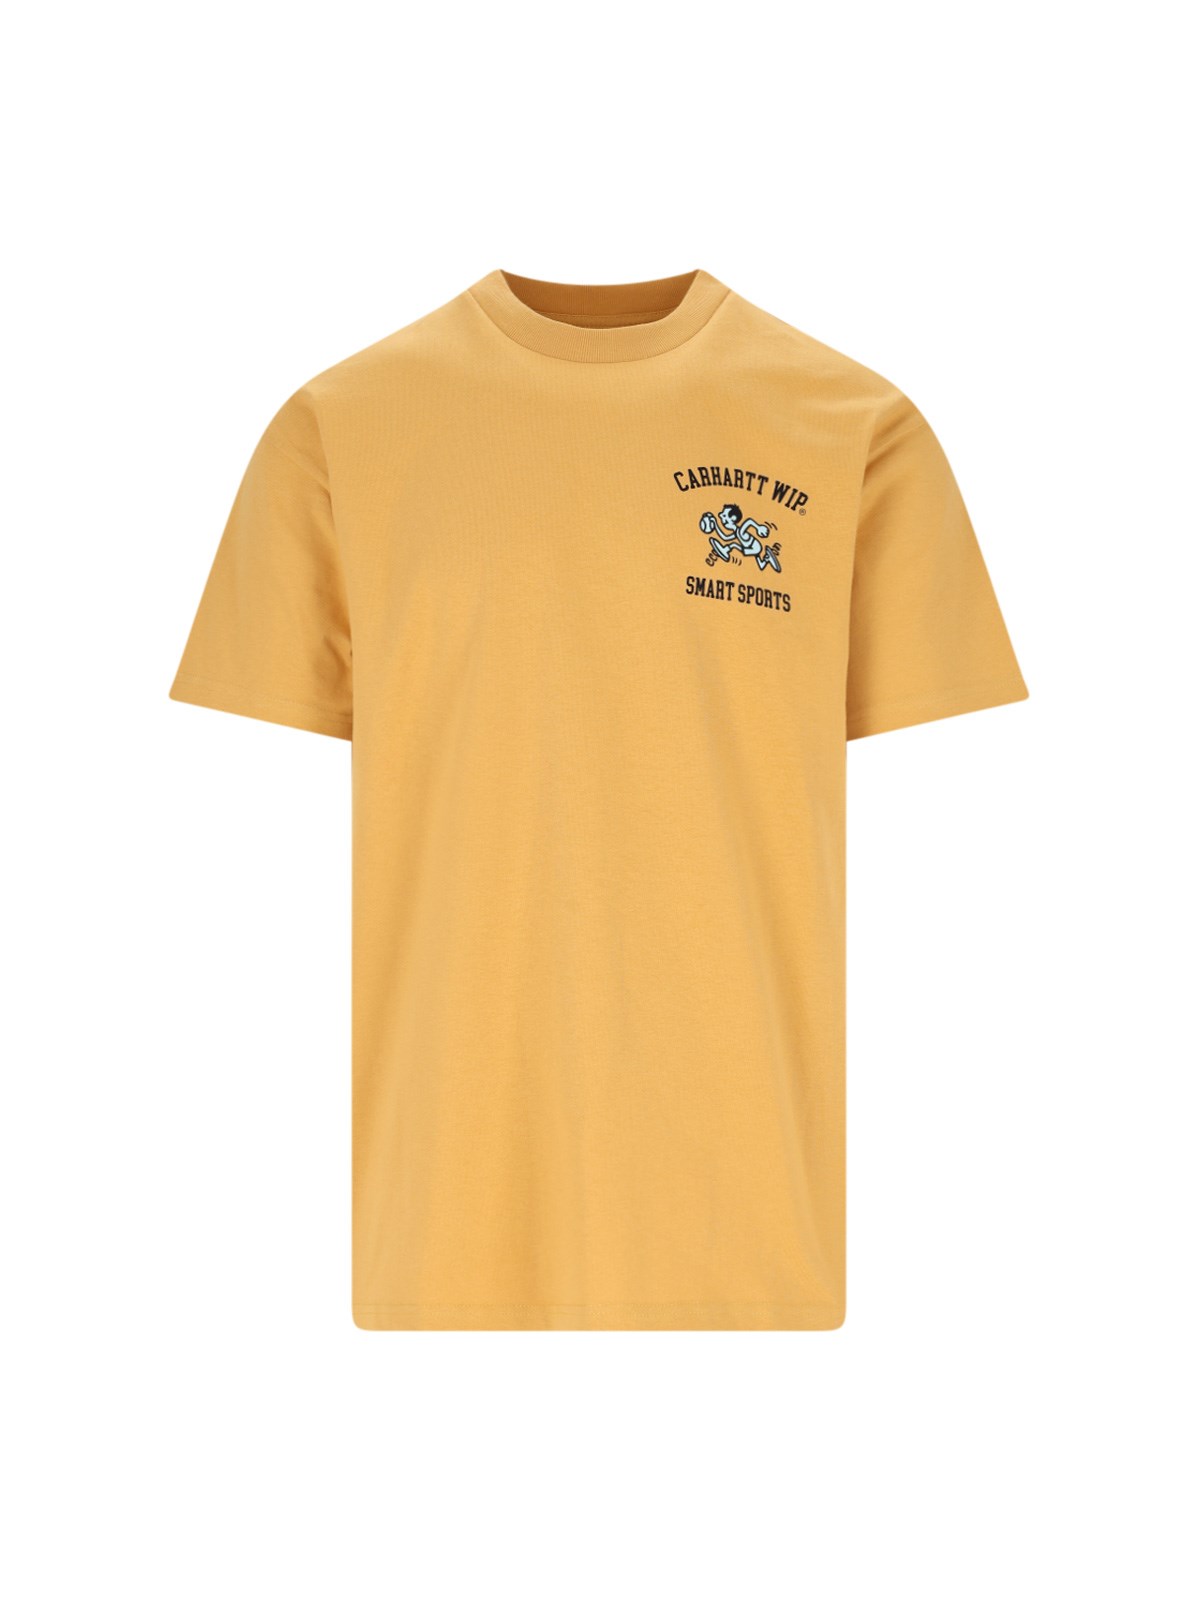 Carhartt 's/s Smart Sports' T-shirt In Yellow